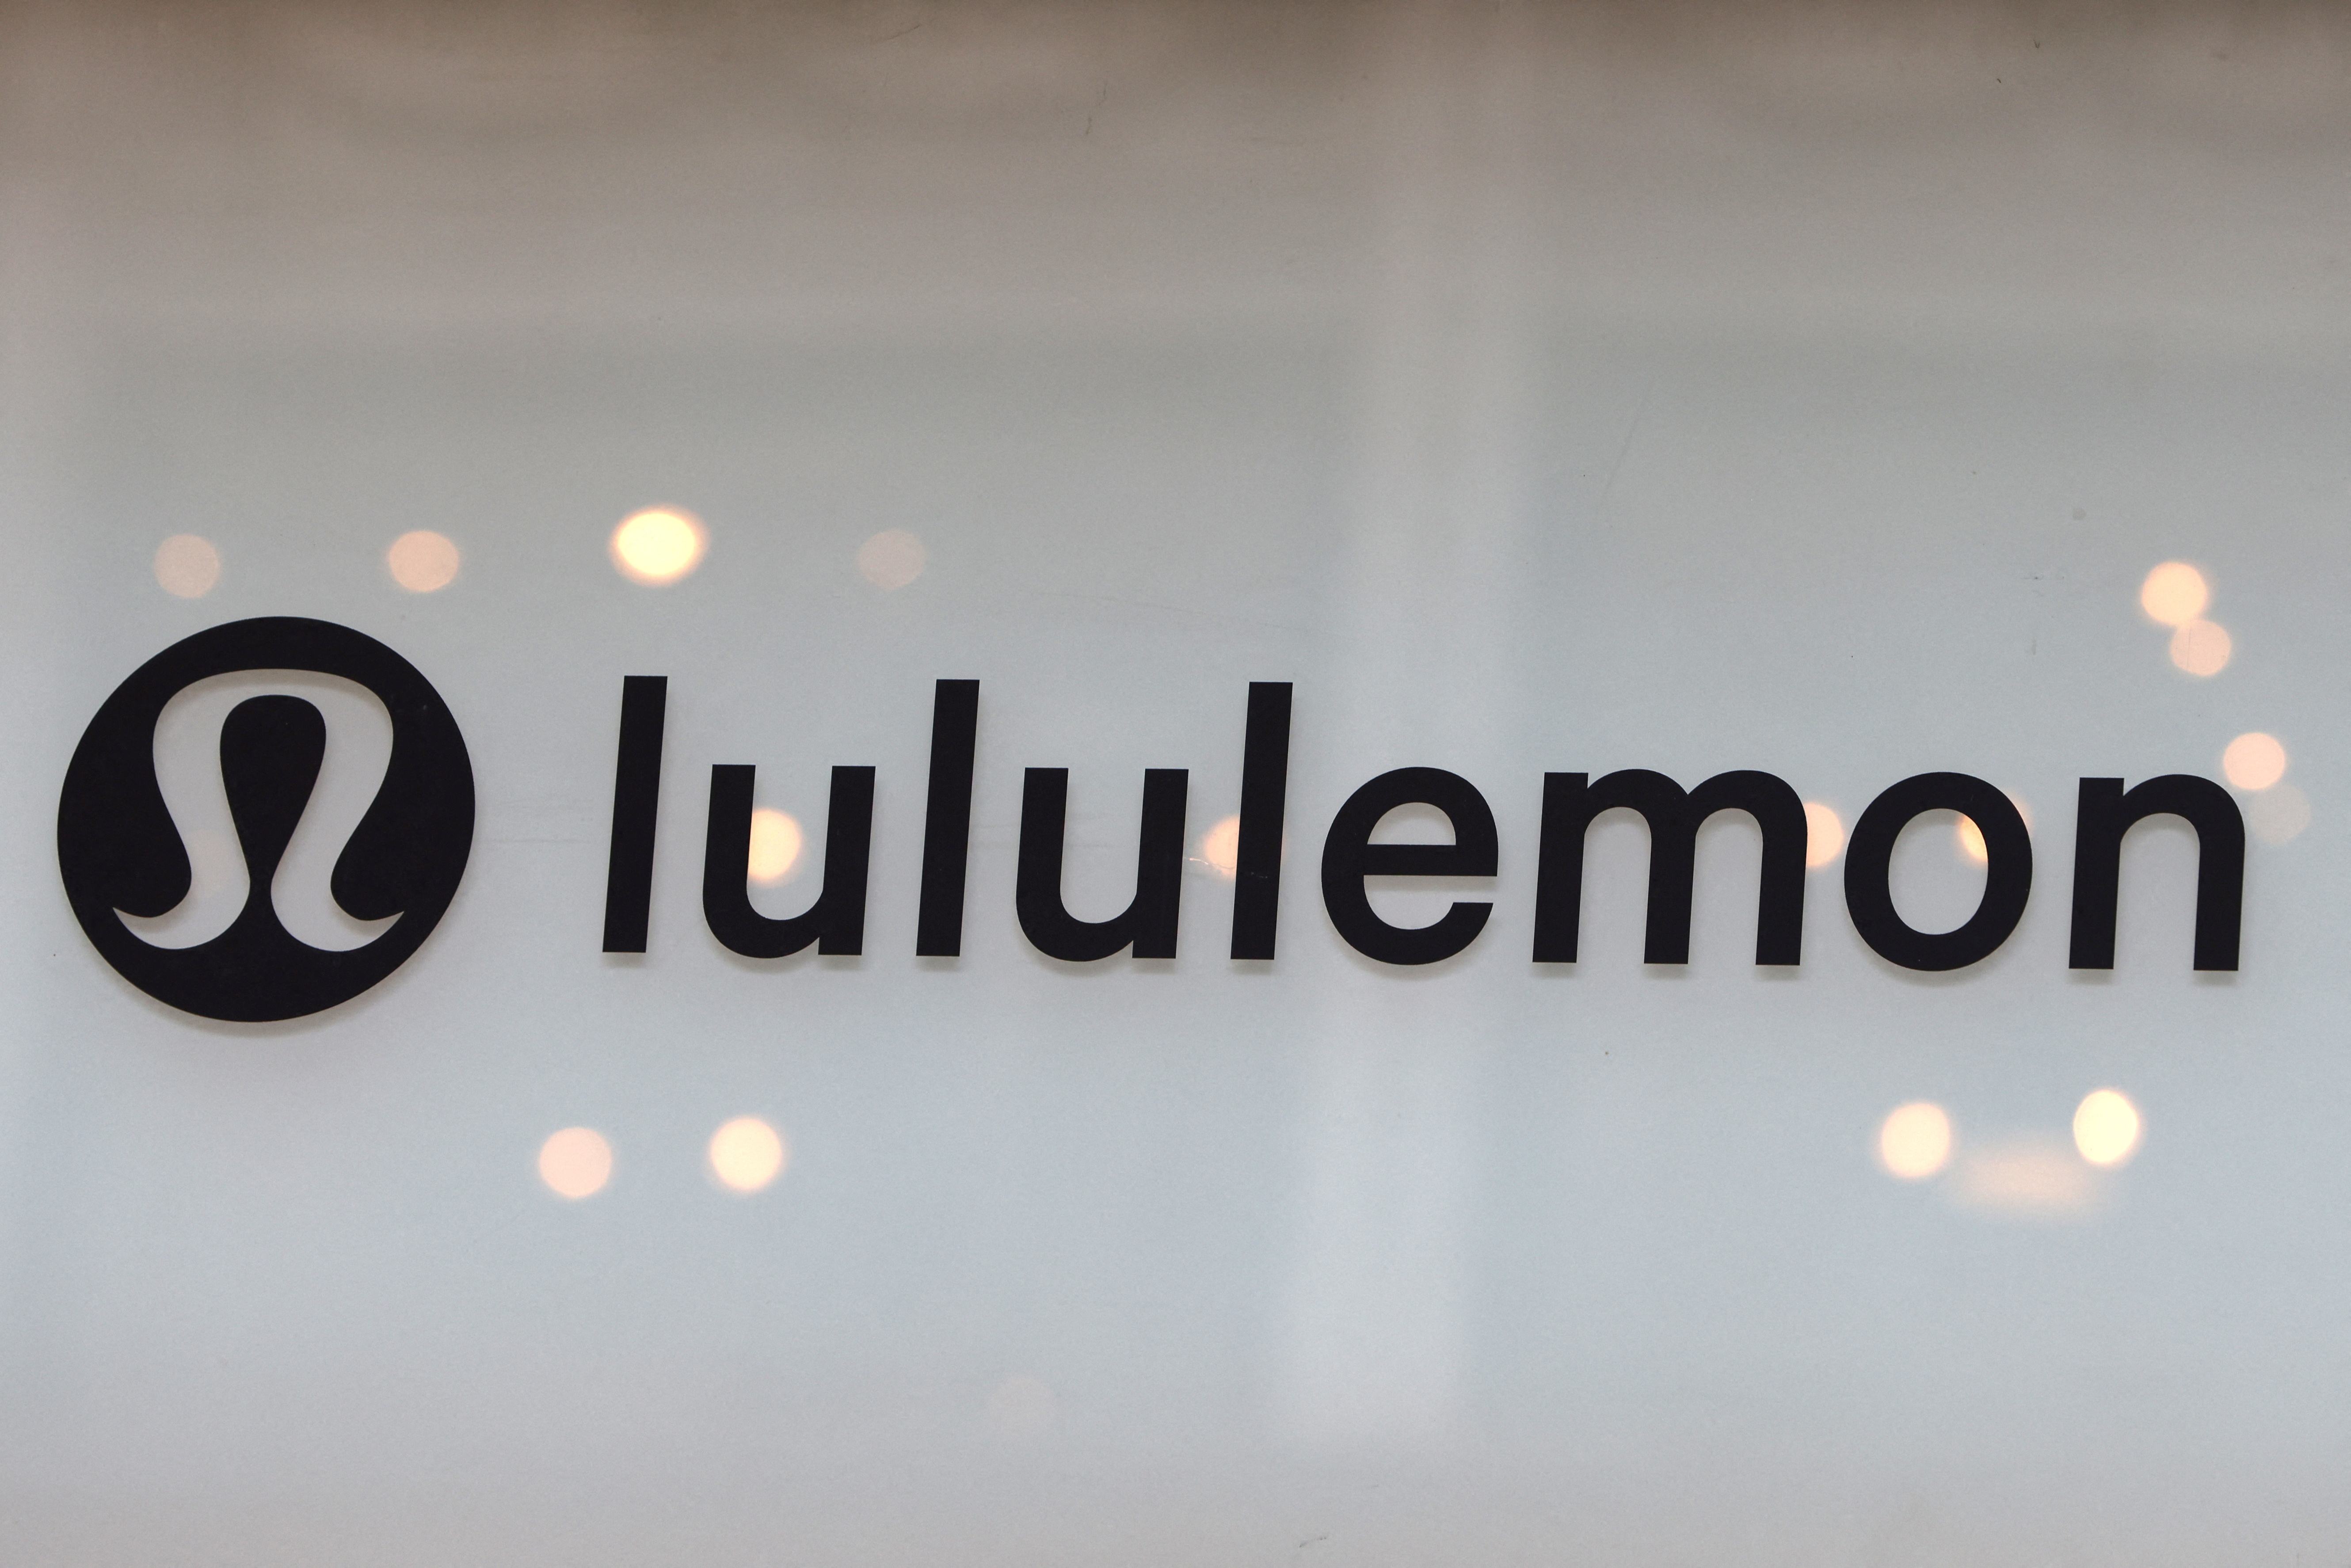 Under Armour, Lululemon reveal board adjustments